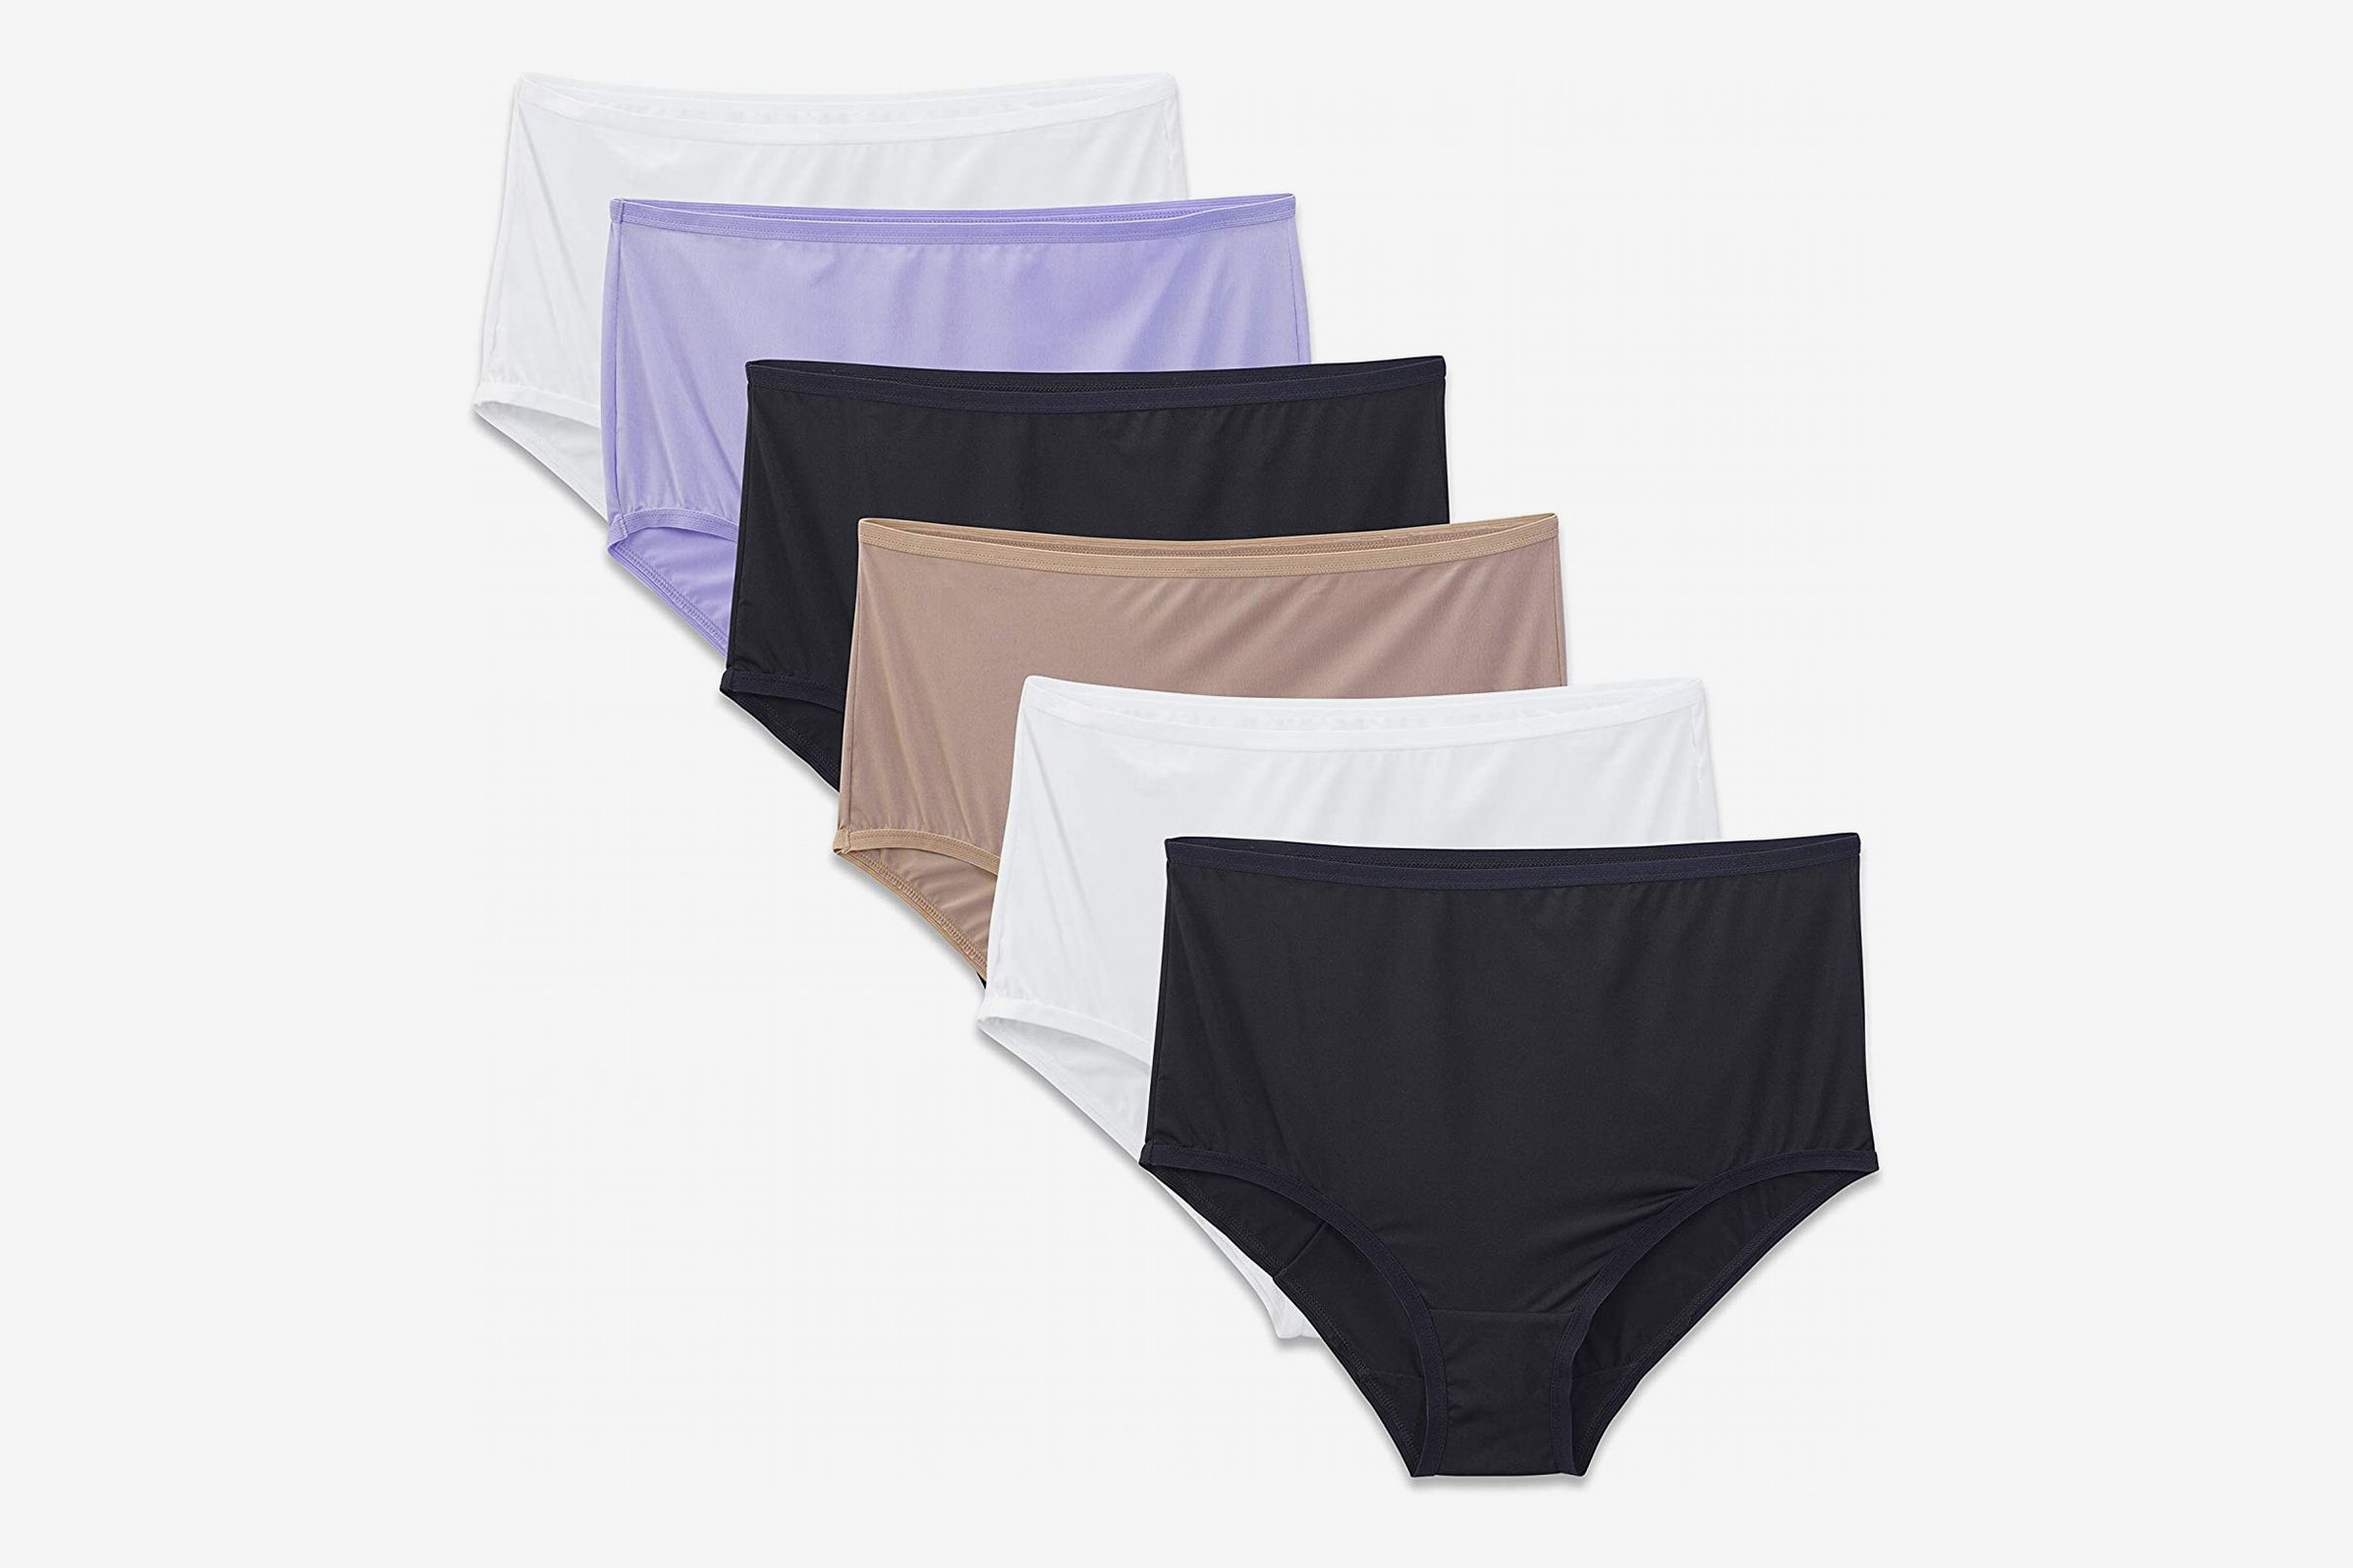 XIAOFFENN Underwear Women Pack Bulk Underwear For Women Mesh High